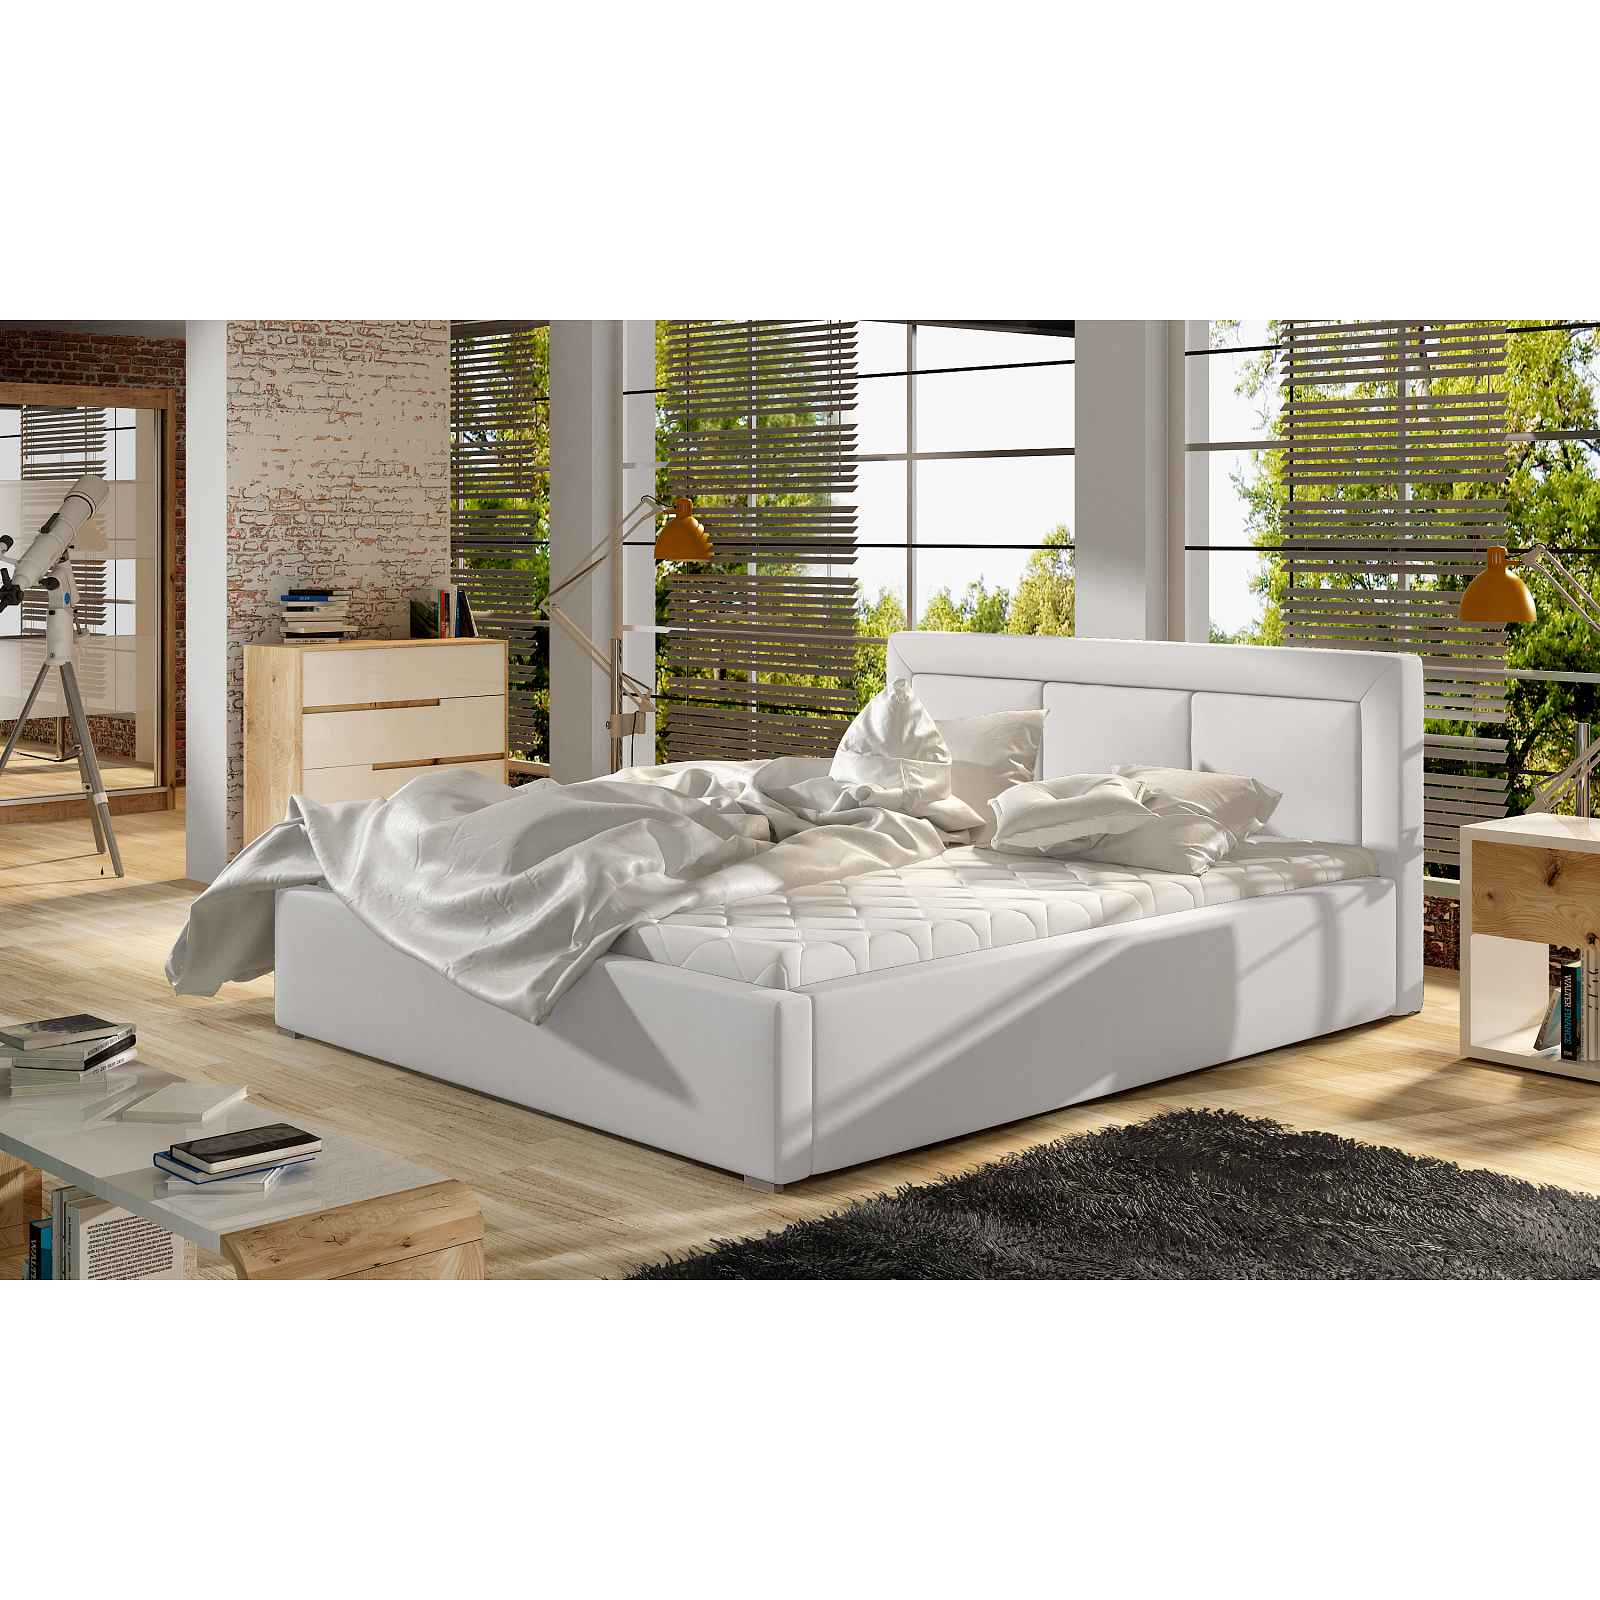 Moderní postel Bregen 180x200cm, bílá HELCEL